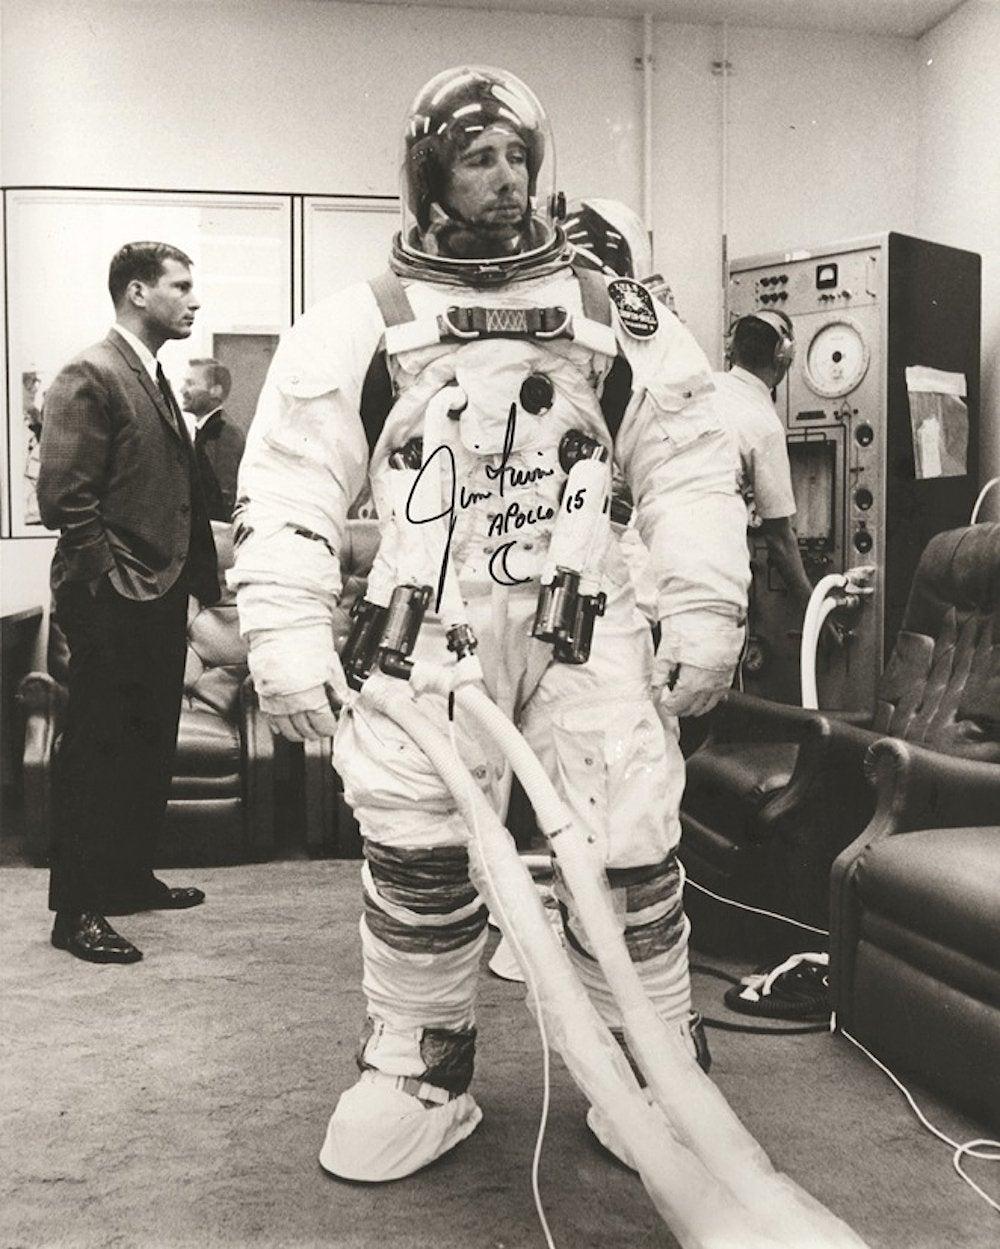 British Jim Irwin Apollo 15 Signed 1971 Photograph Black and White